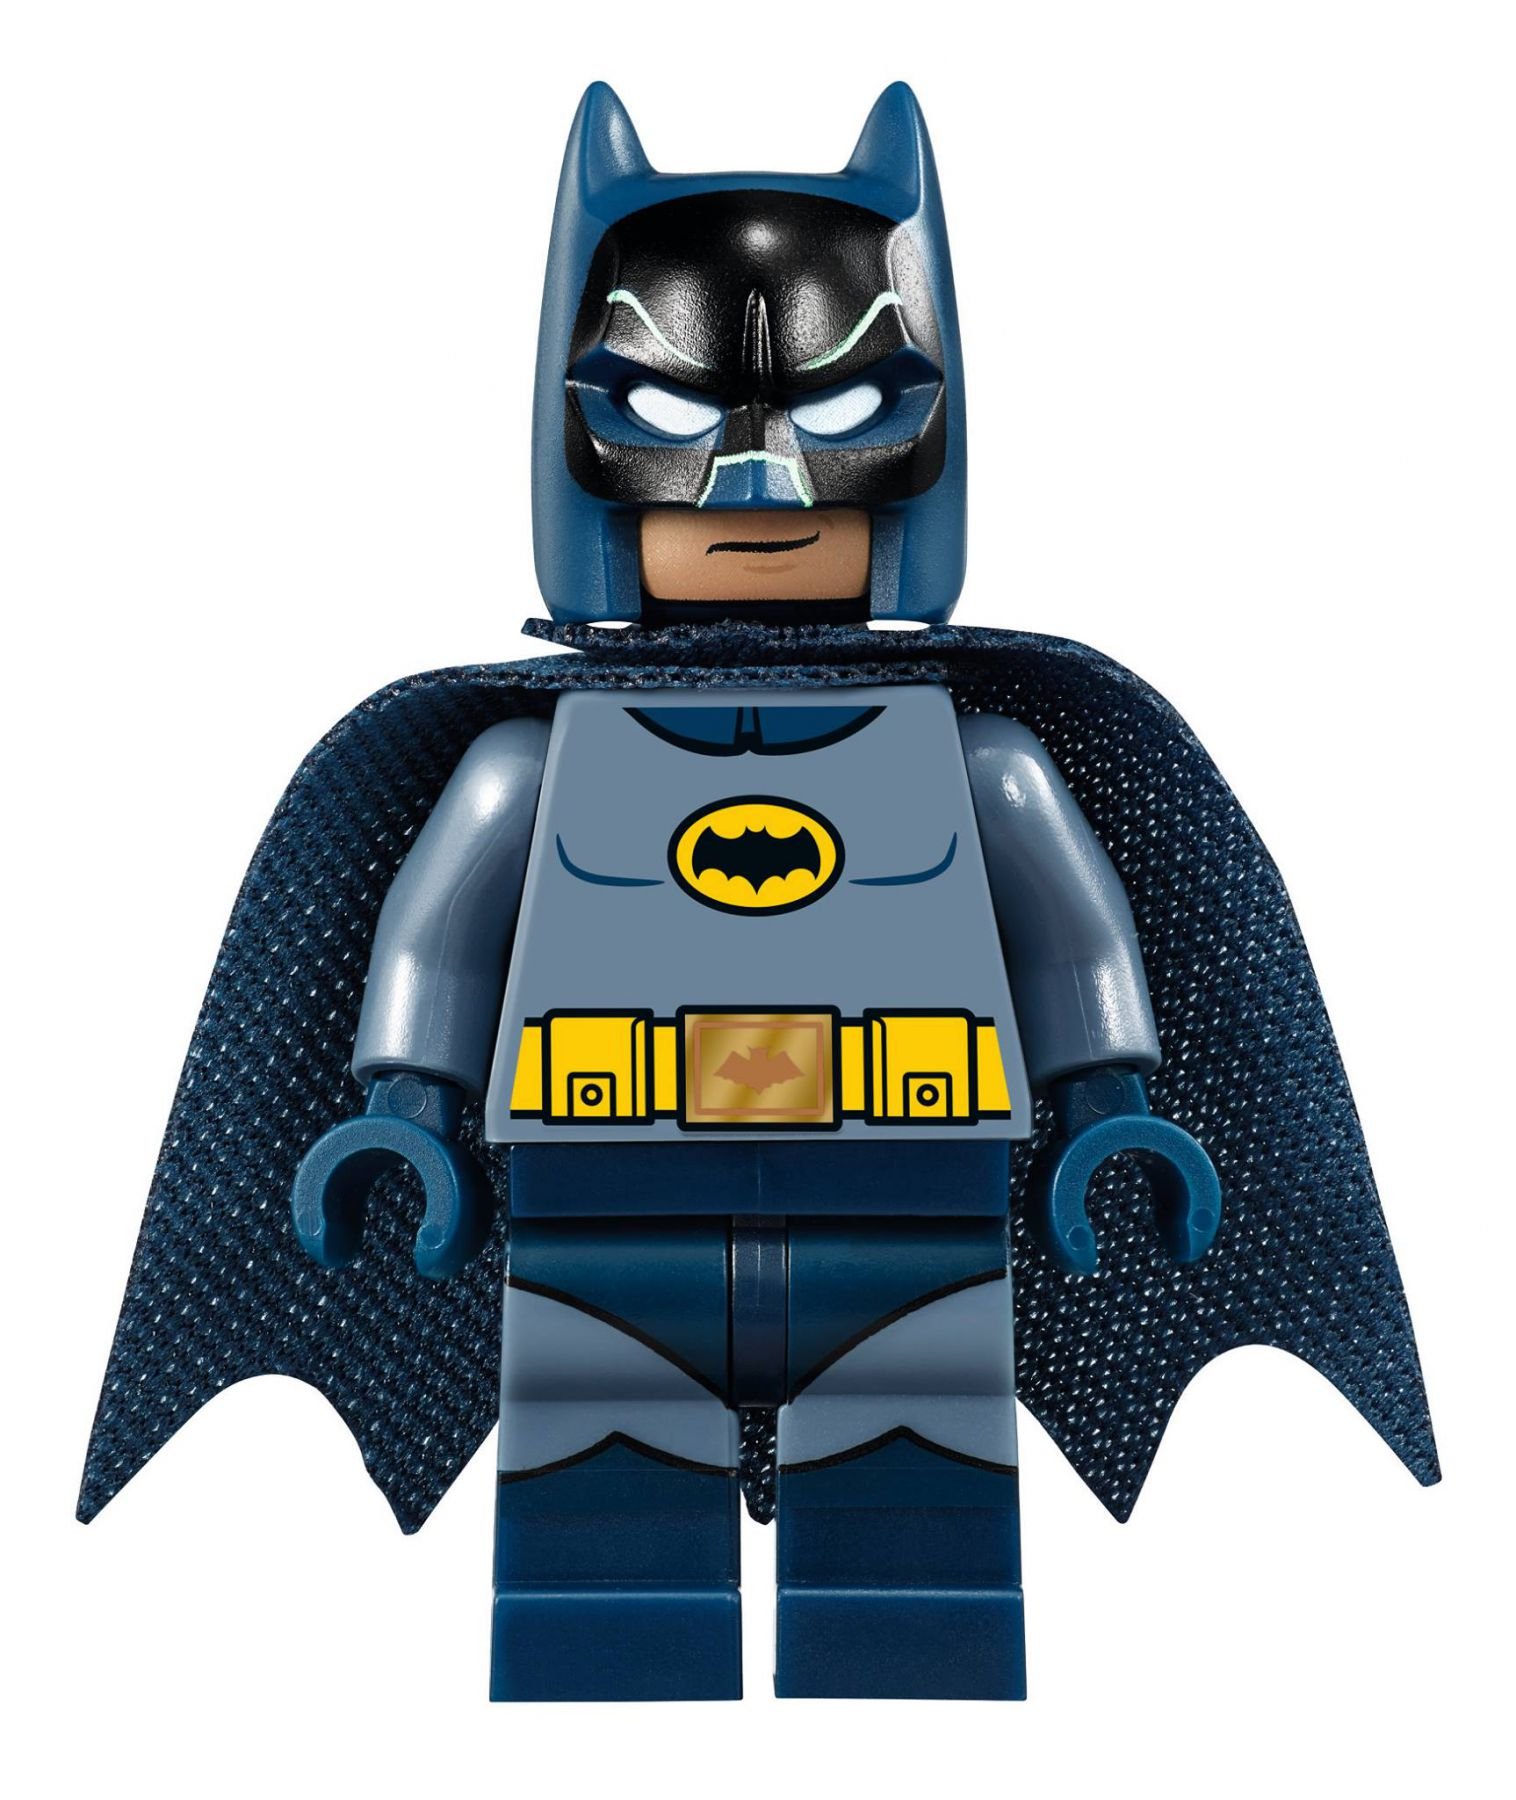 LEGO Super Heroes 76052 Batman™ (TV-Klassiker) – Bathöhle LEGO_76052_Batcave_02.jpg